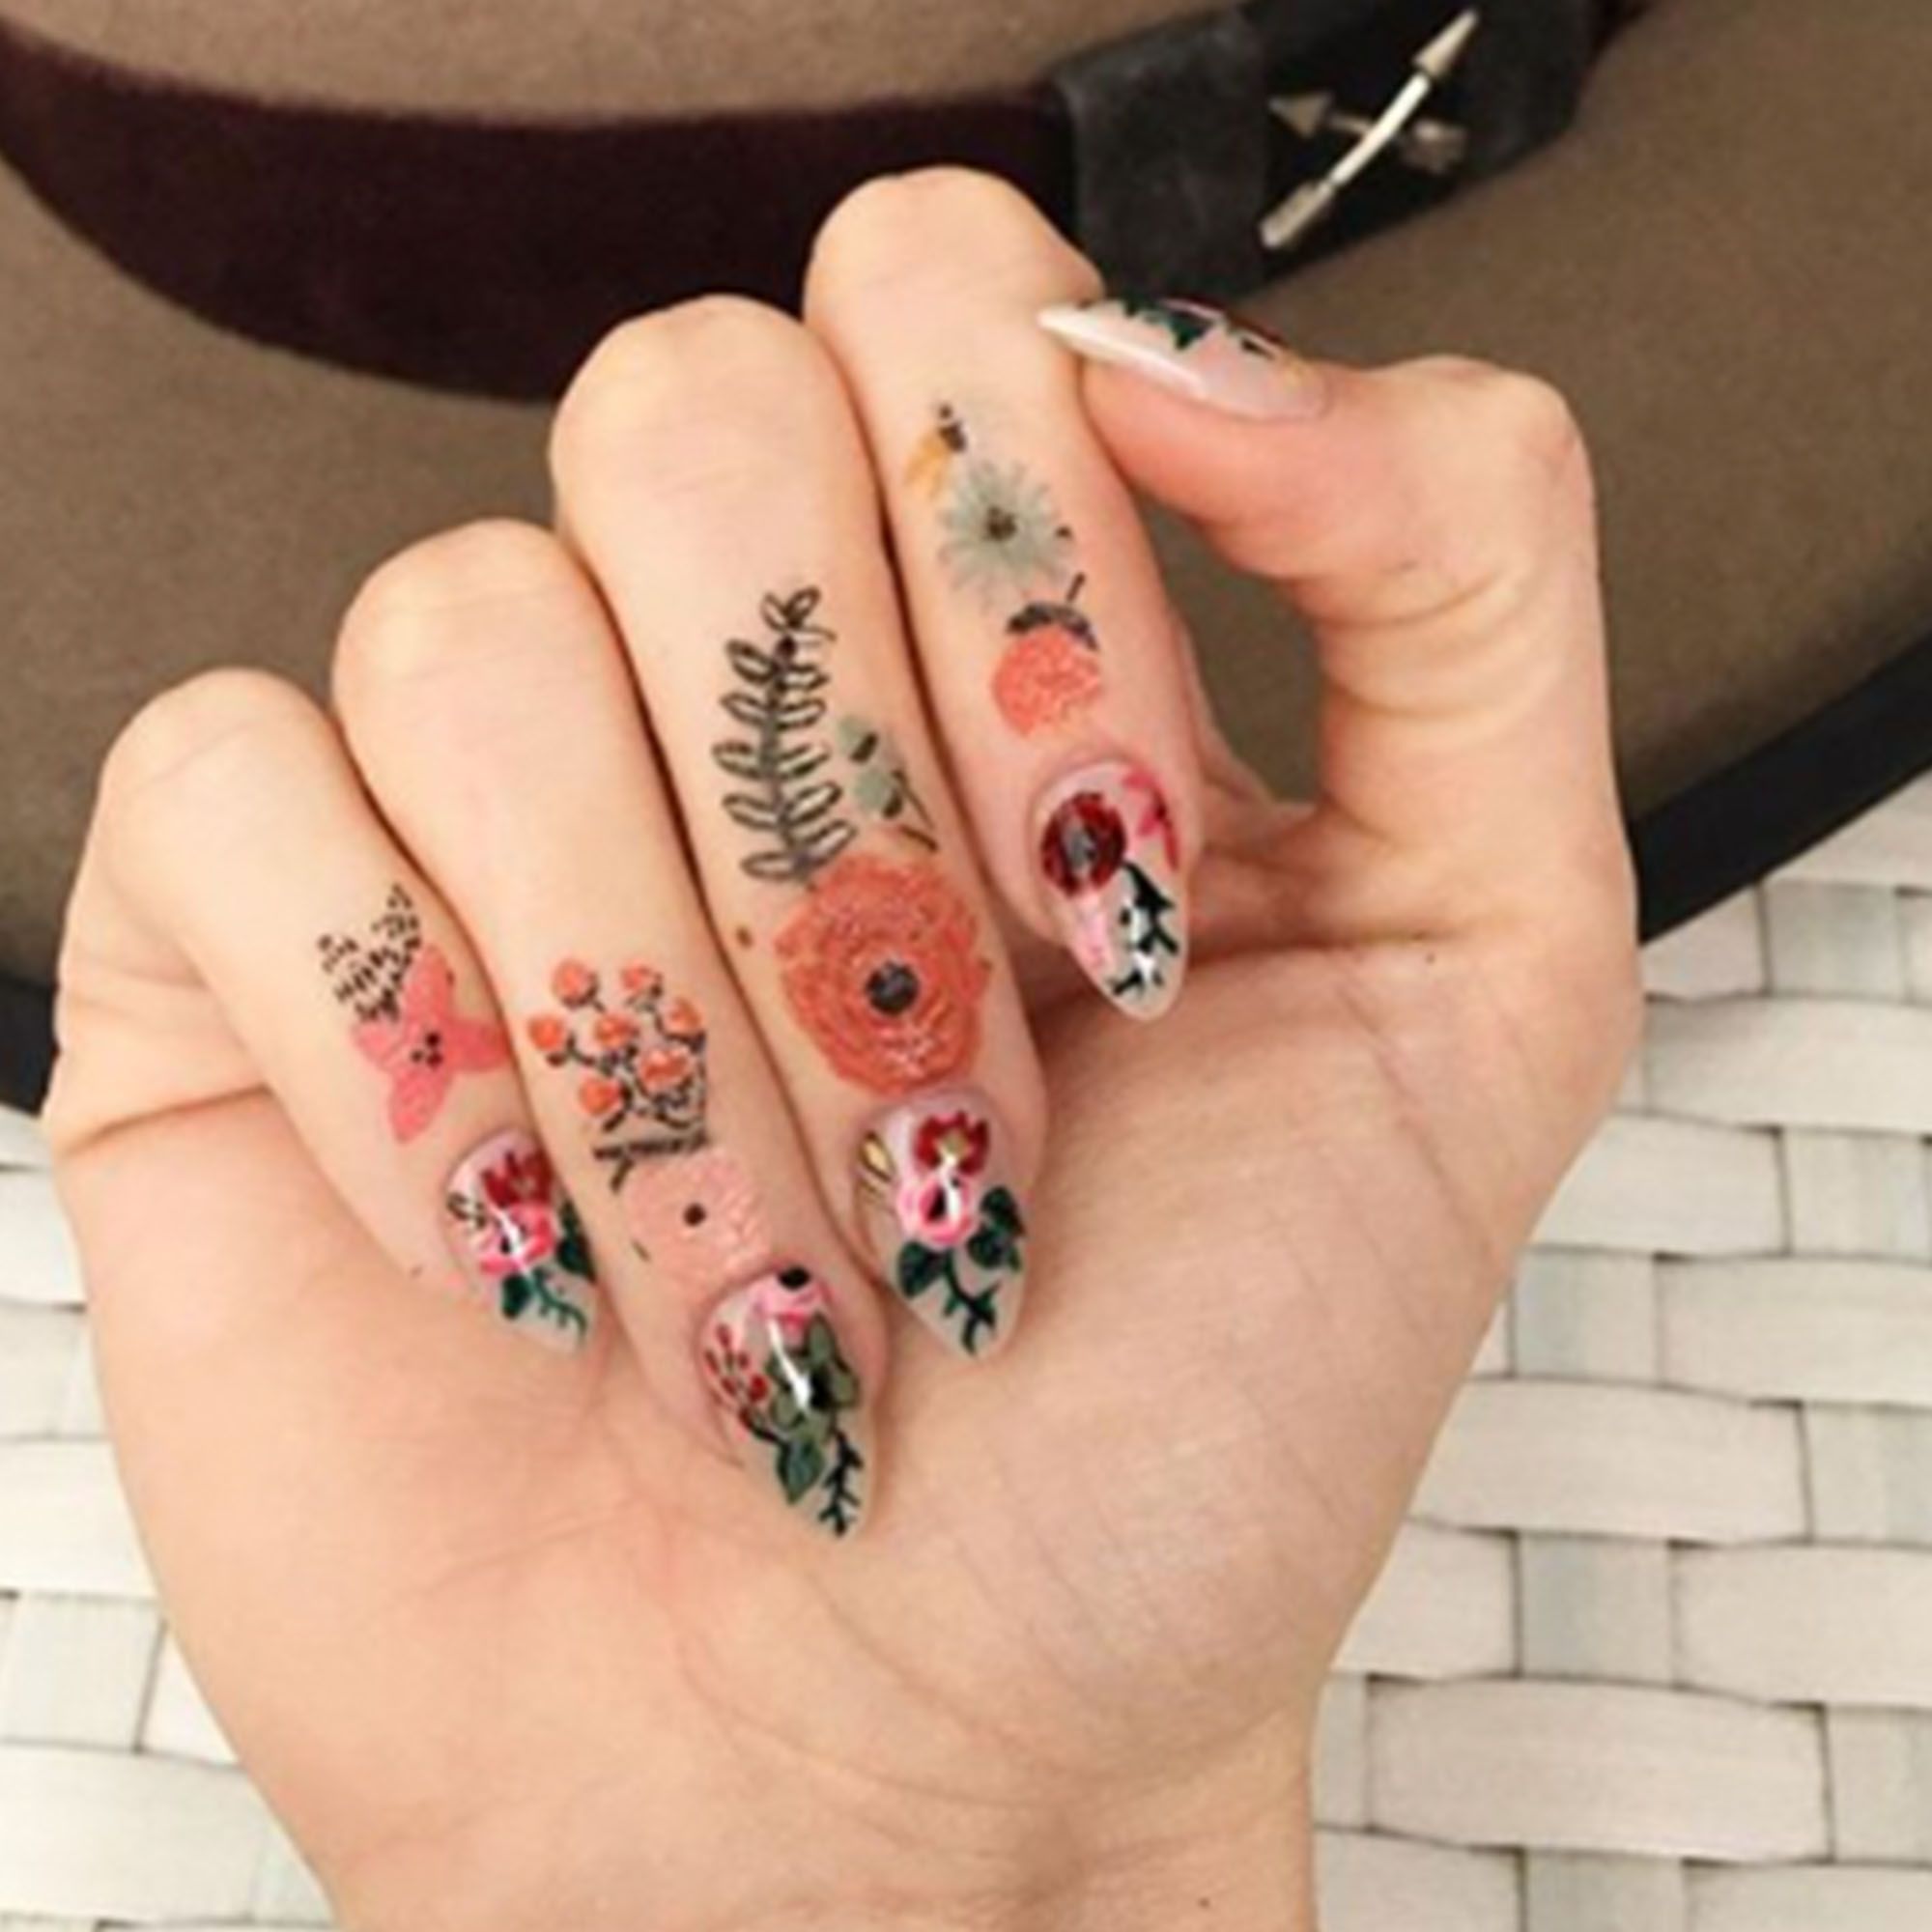 Flower Nails And Floral Art Designs Nail Wraps – ManicureFX